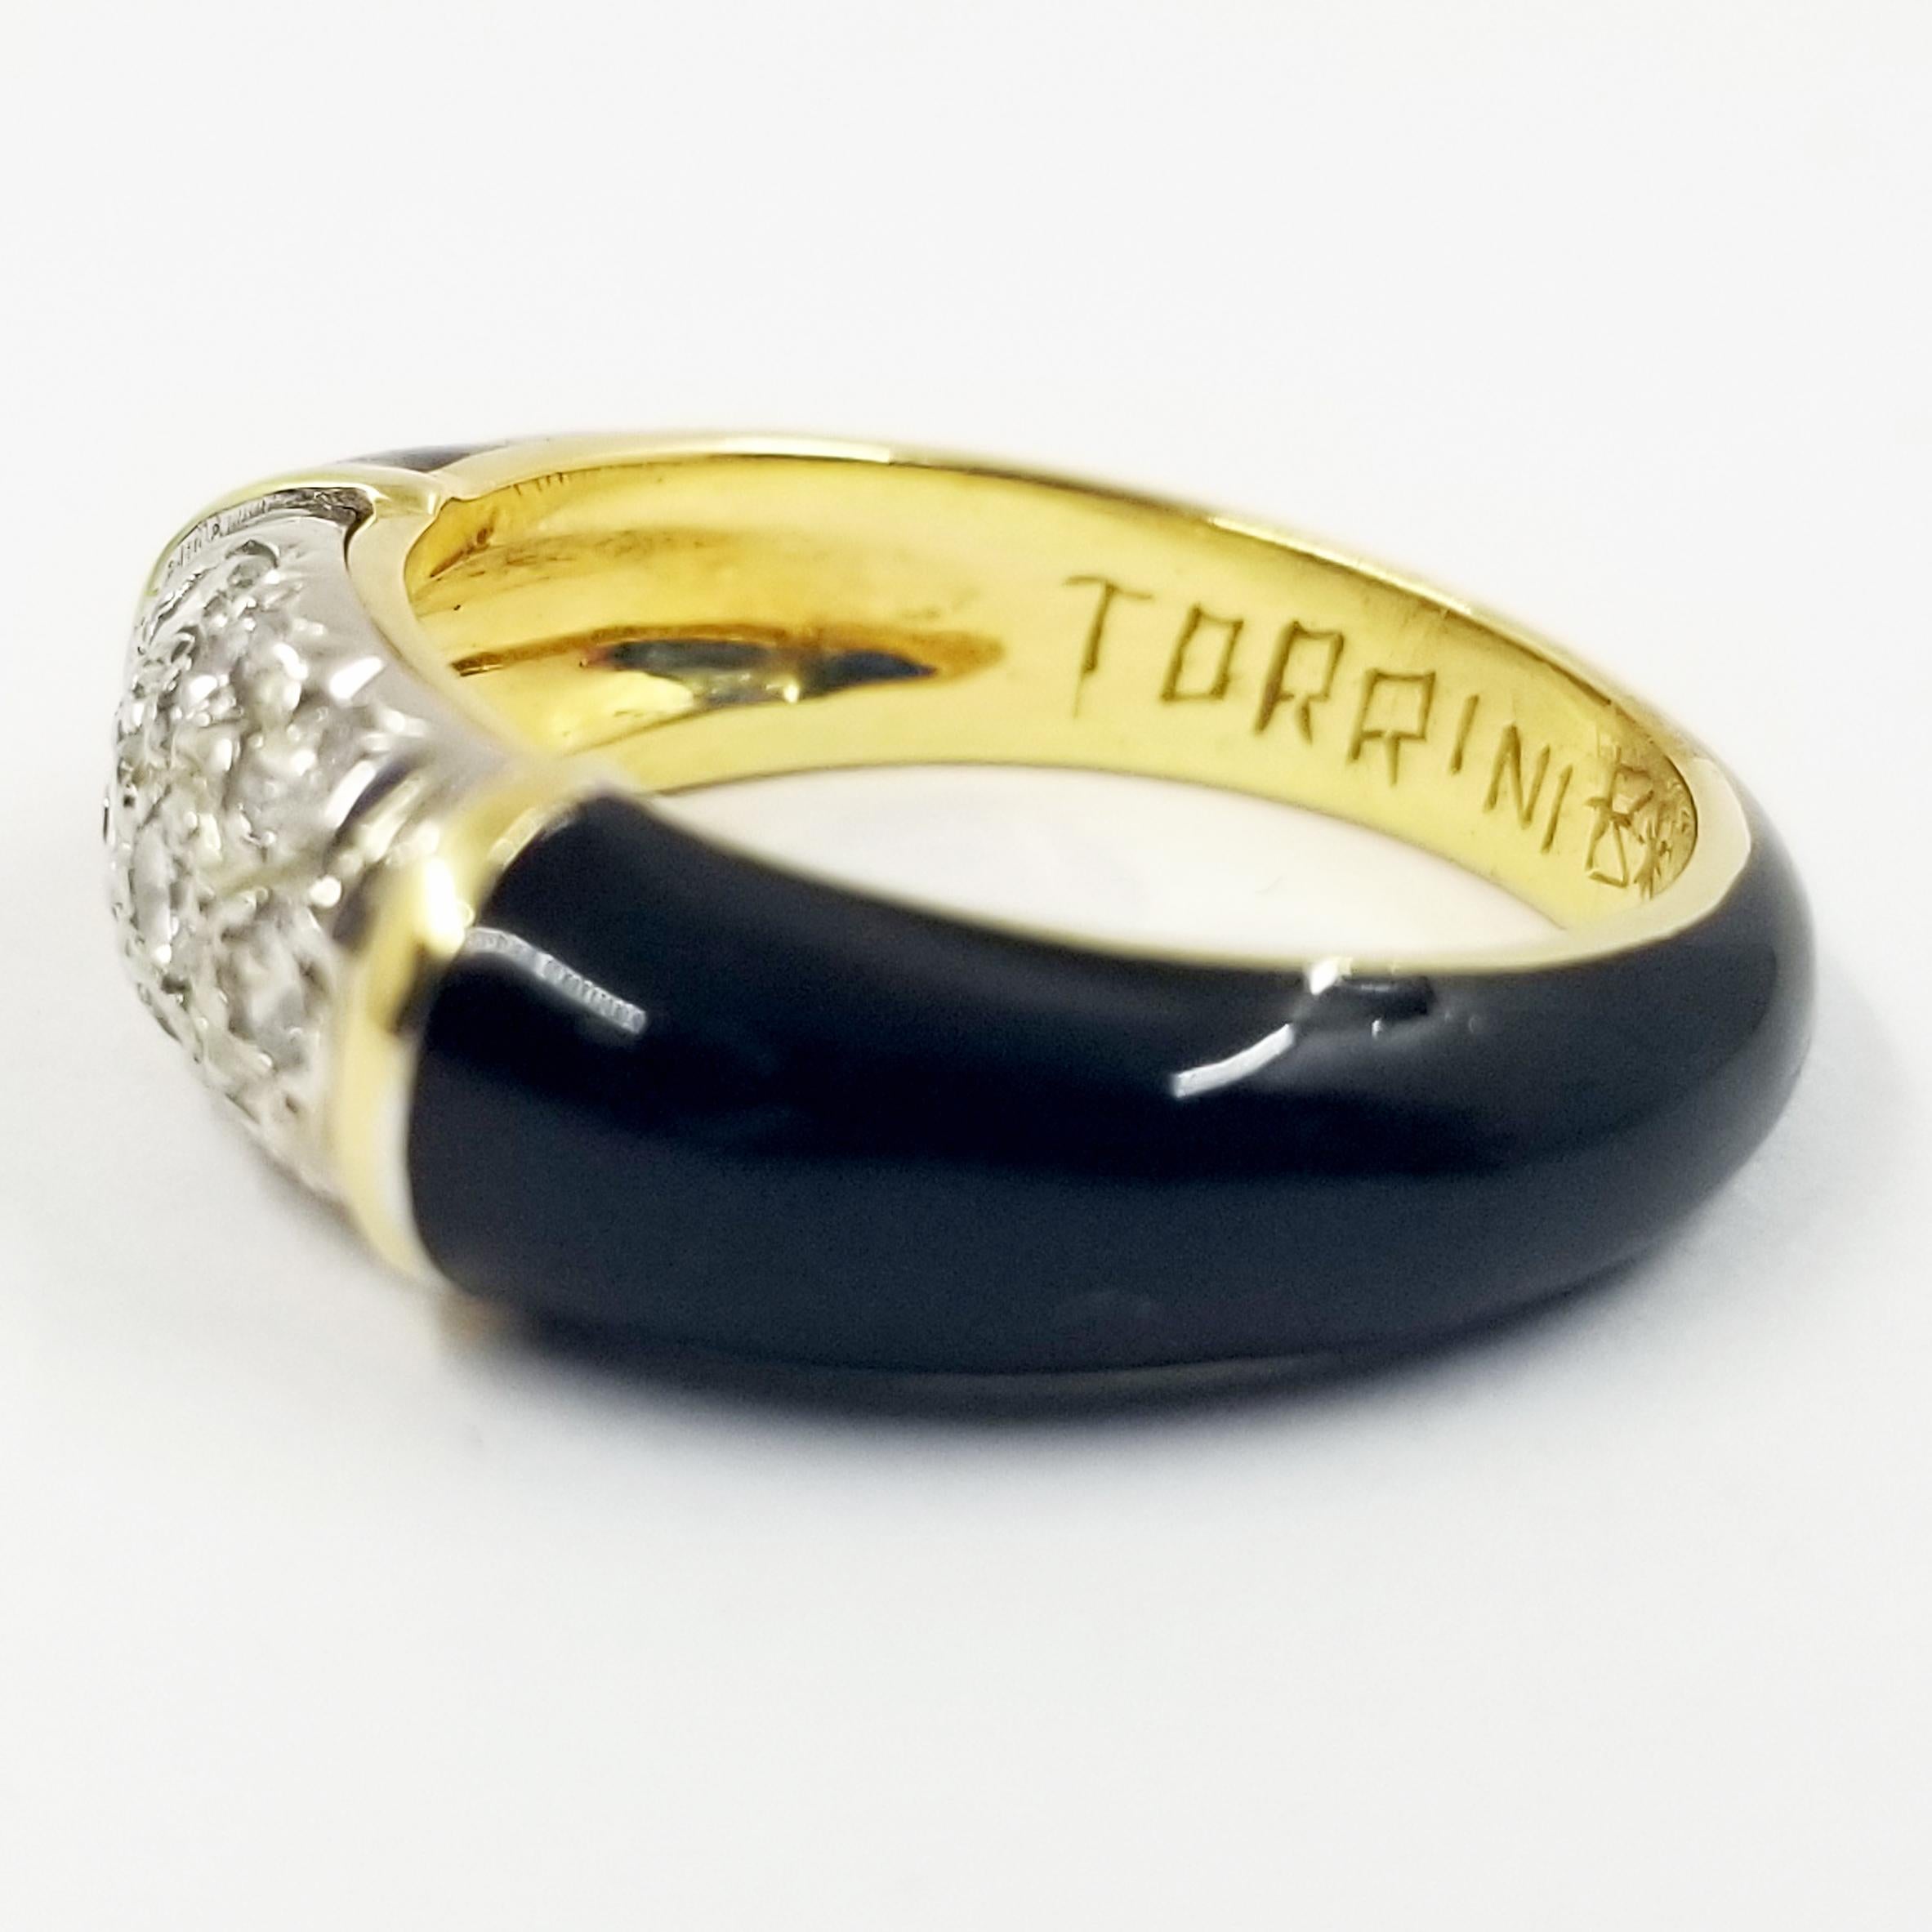 Round Cut Torrini Black Enamel Ring with Pave Diamond Center